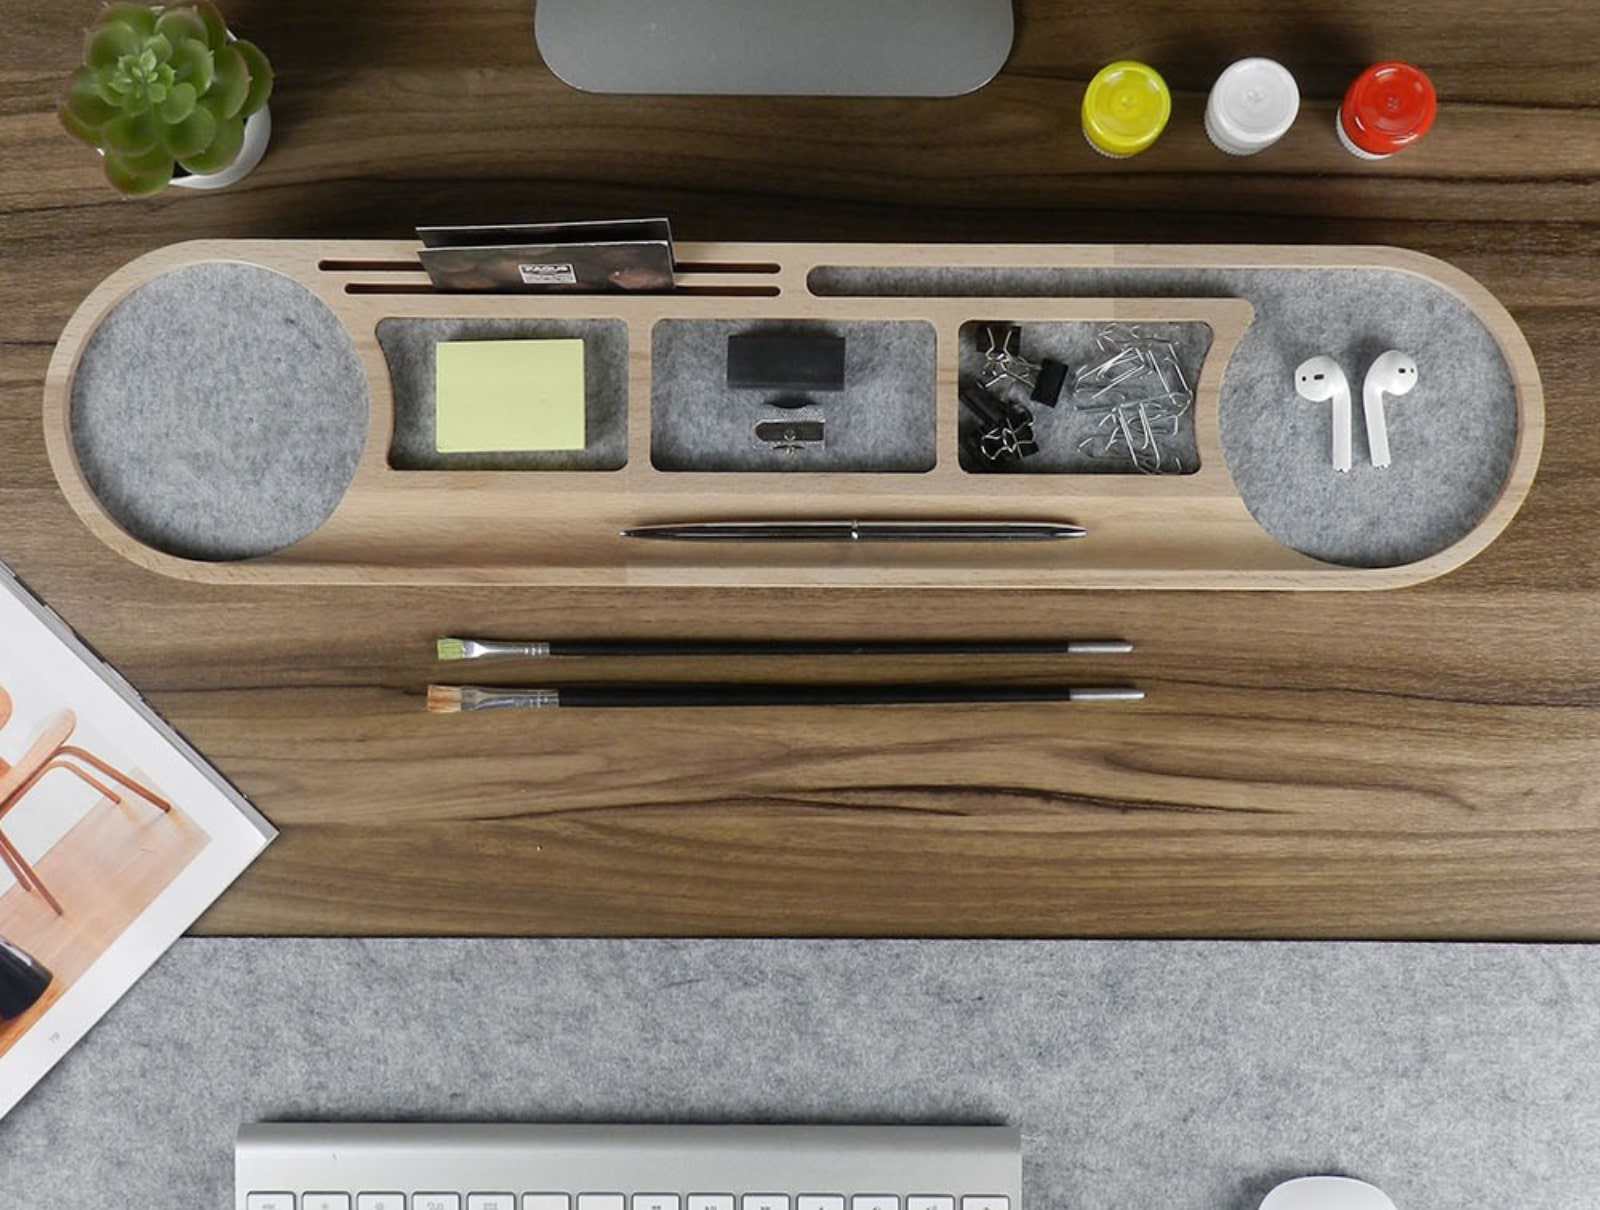 Wooden Office Accessories, Desk Organizers